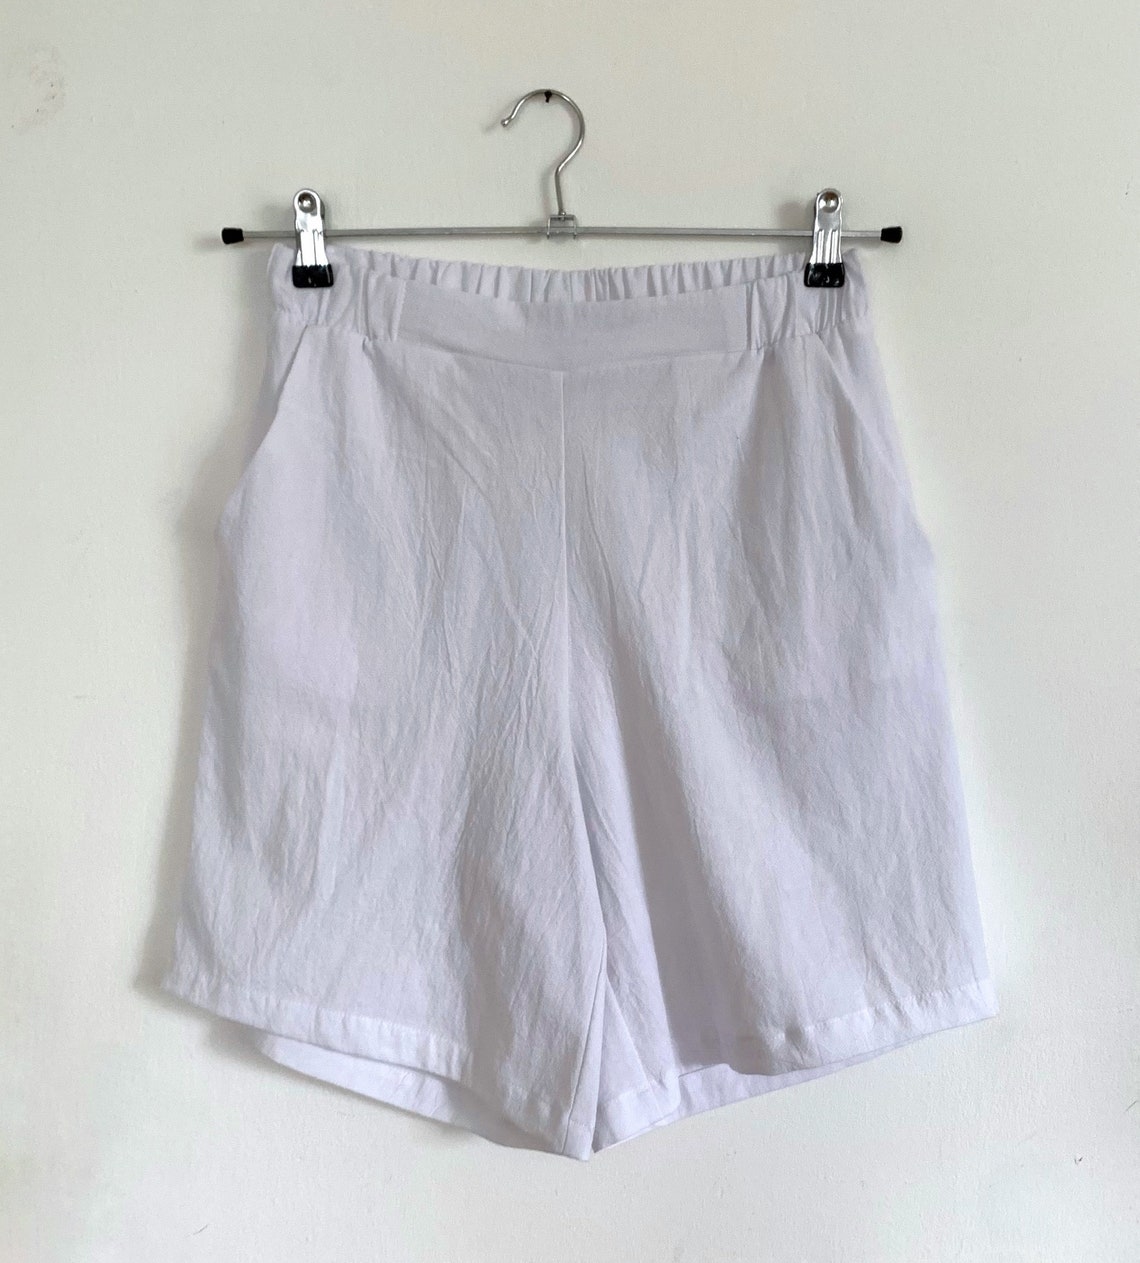 Cotton White Shorts,women Summer Casual Shorts Pants,comfortable ...